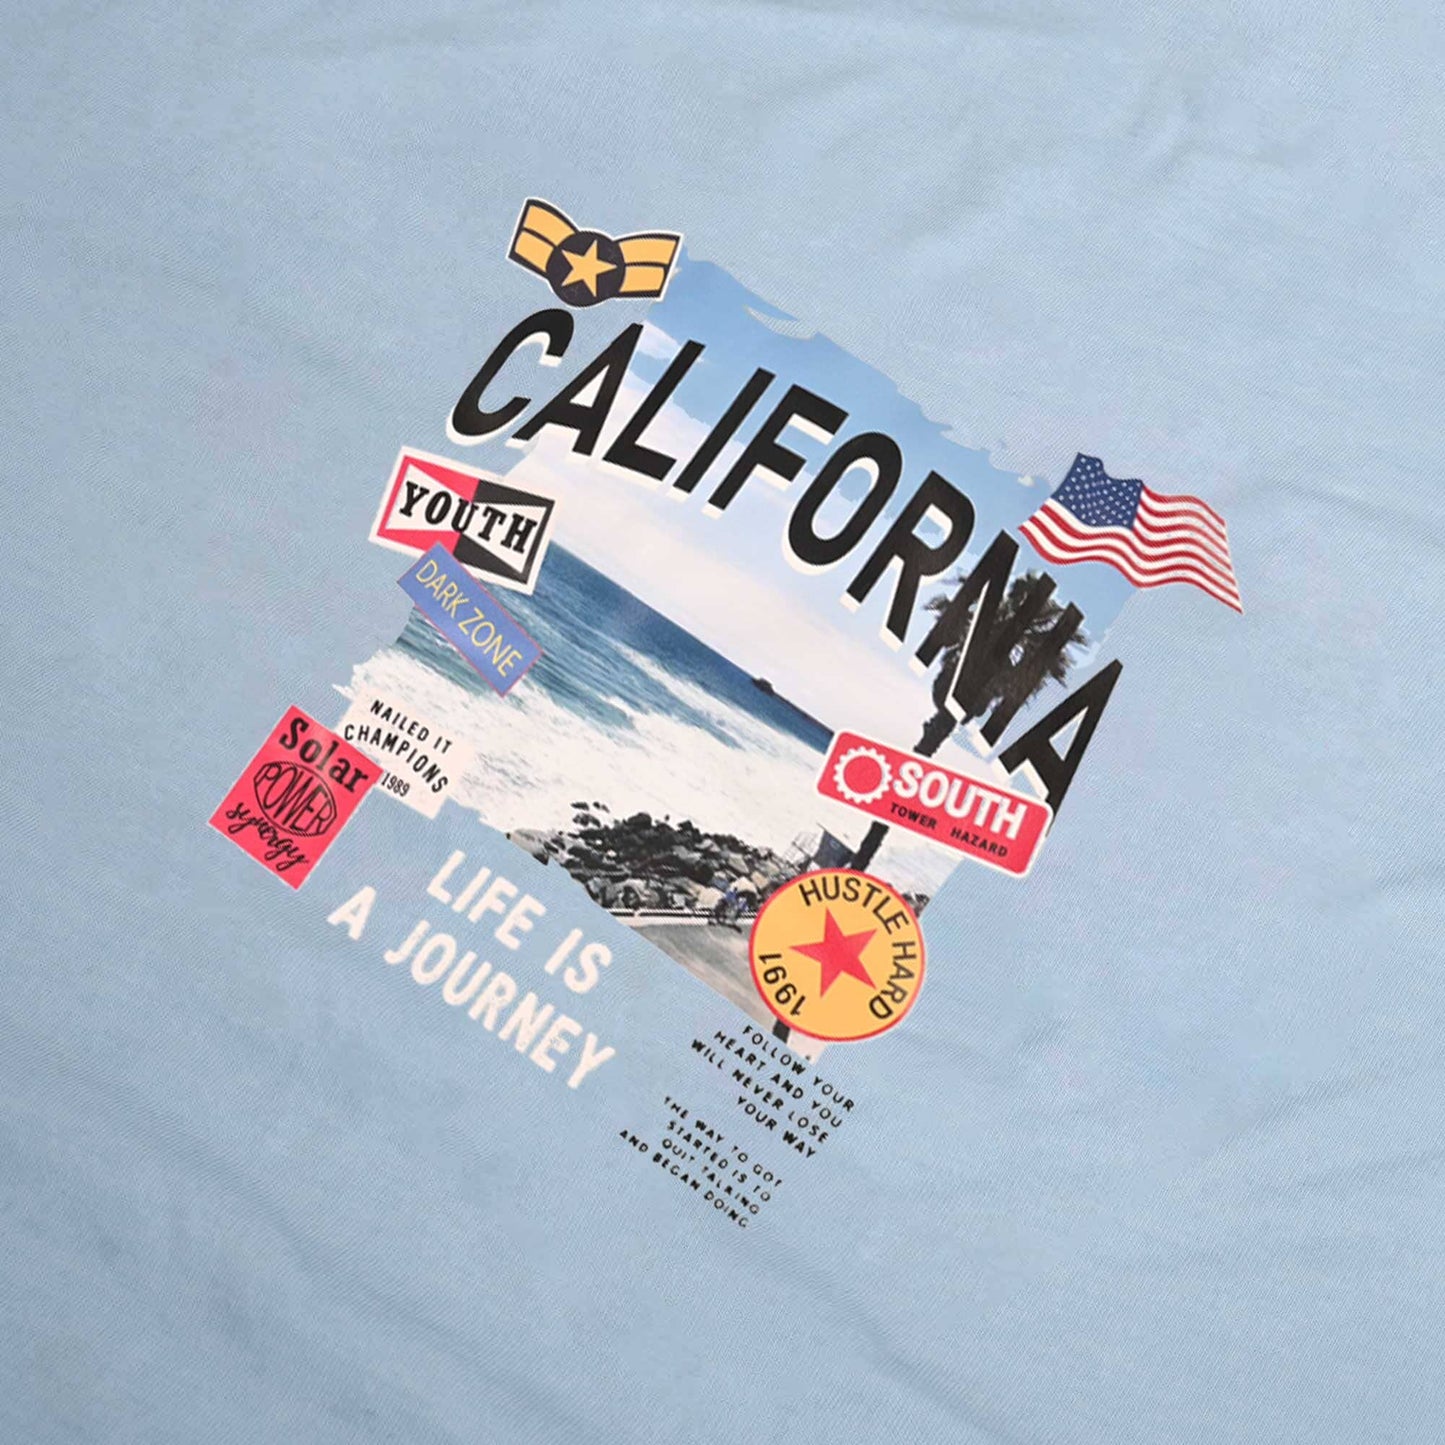 Polo Republica Men's California Printed Crew Neck Tee Shirt Men's Tee Shirt Polo Republica 